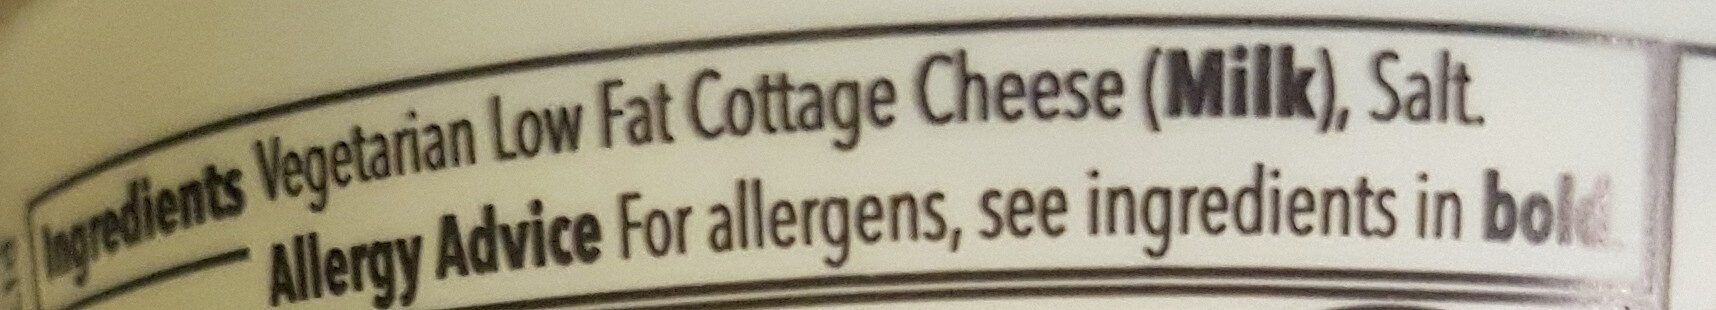 Natural cottage cheese - Ingredients - en